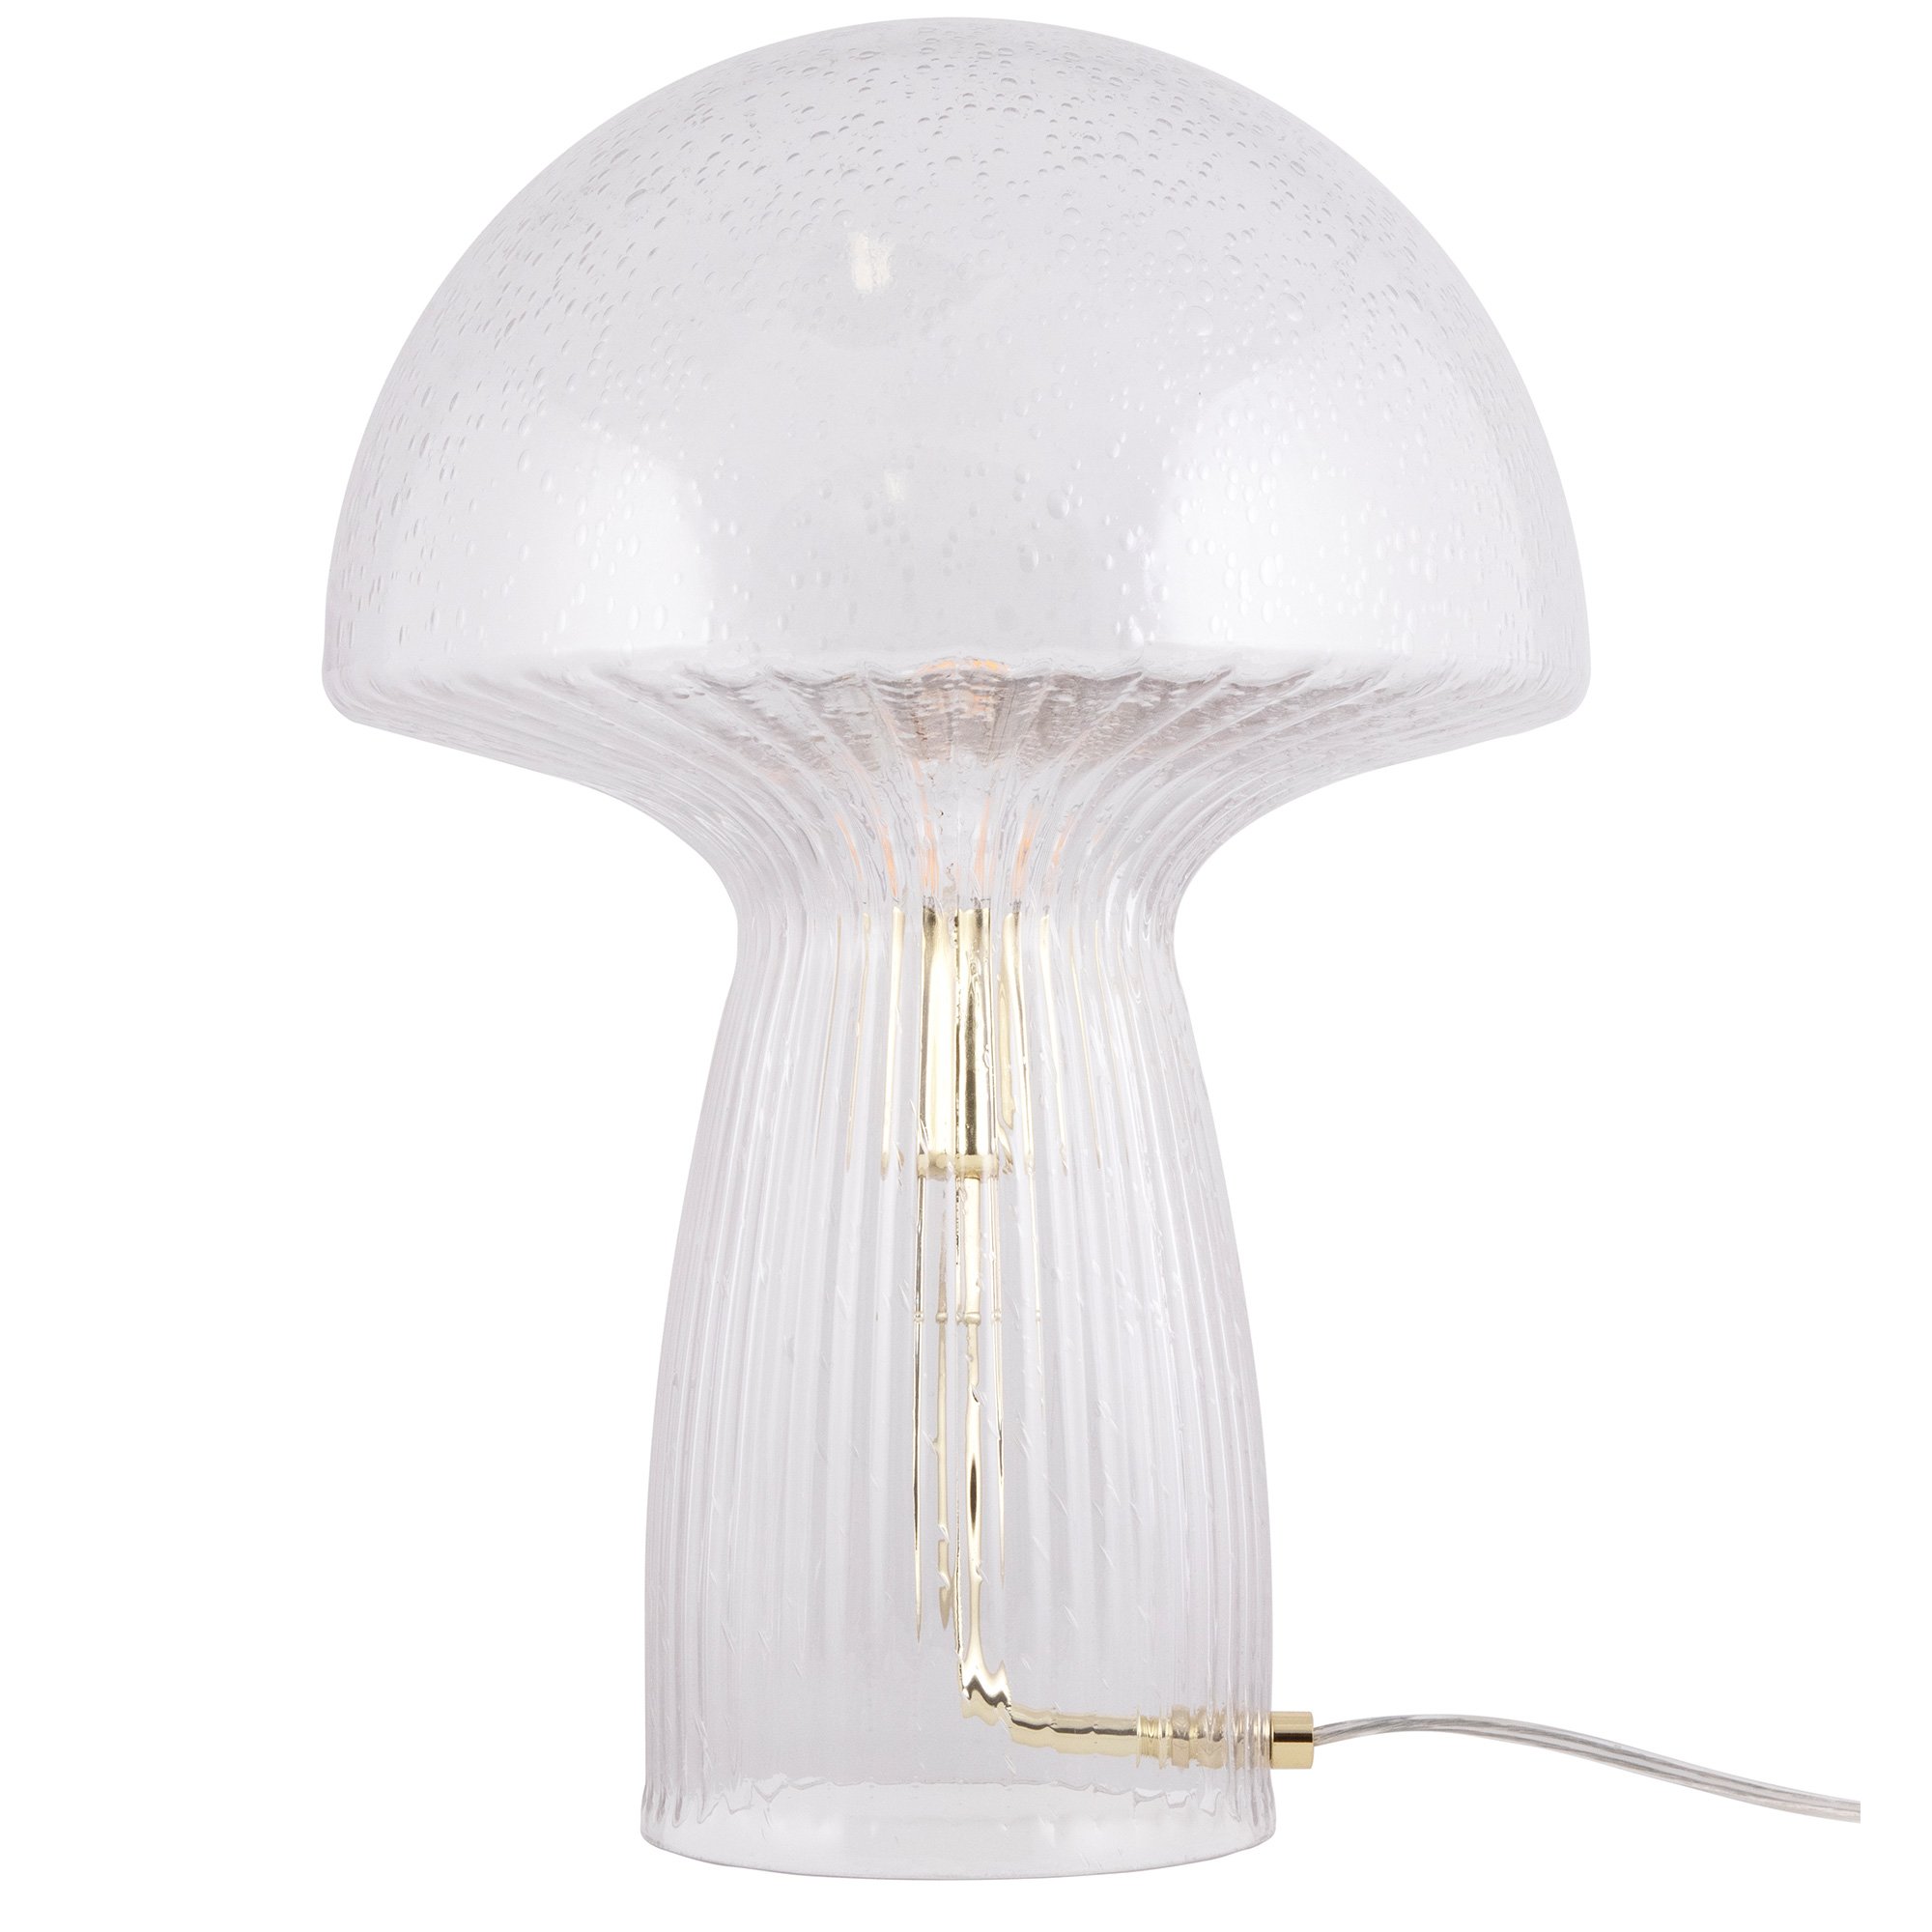 Globen Lighting Fungo Special Edition bordlampe klar, 30 cm.